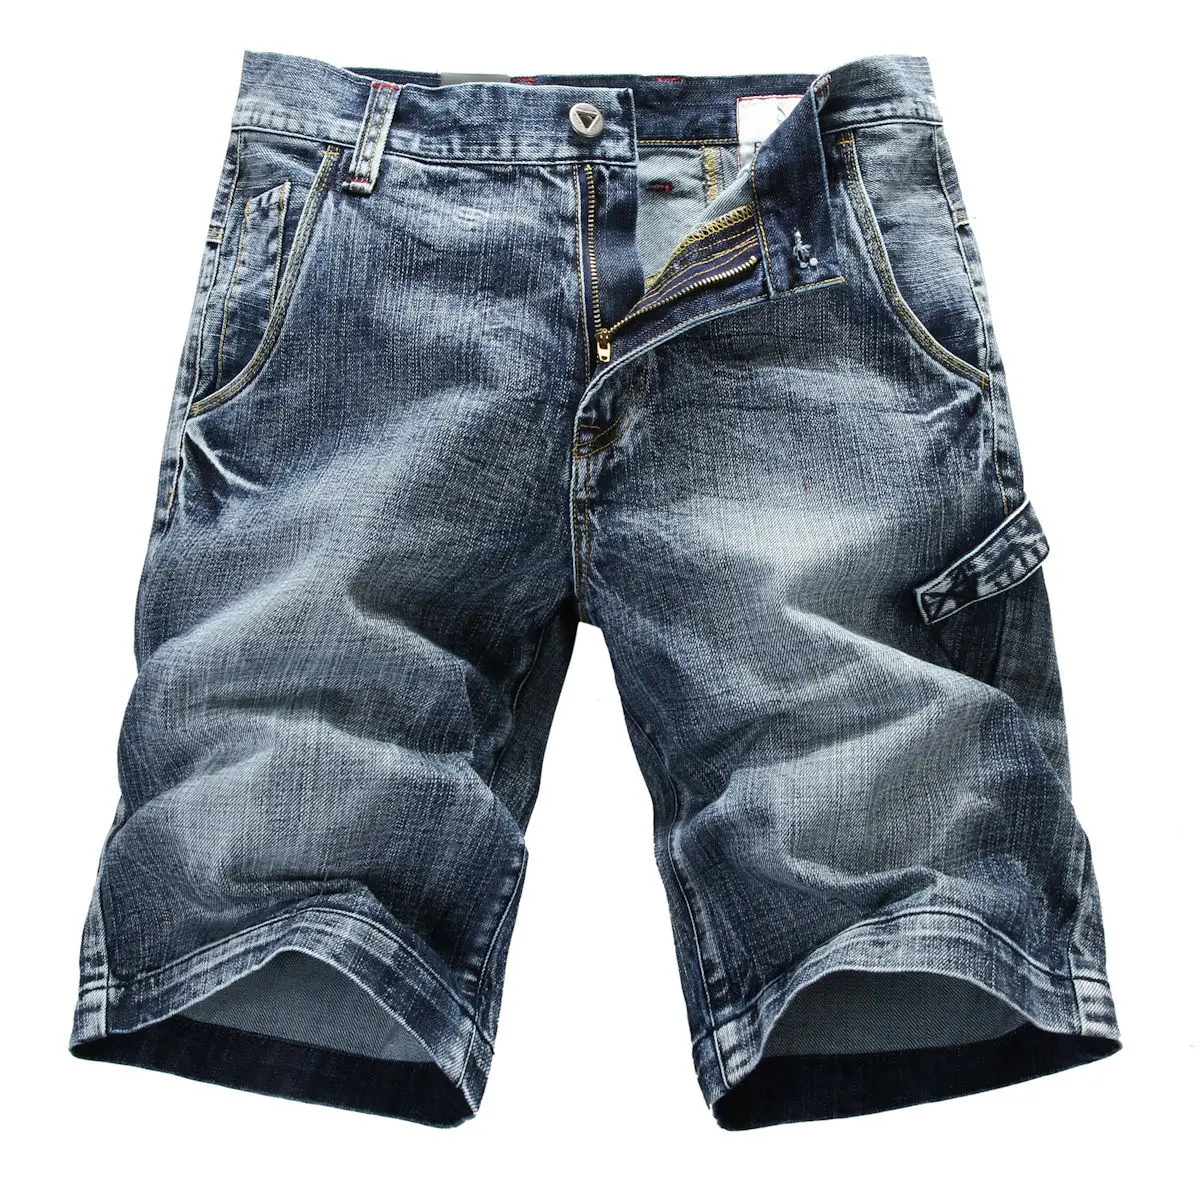 denim shorts brands